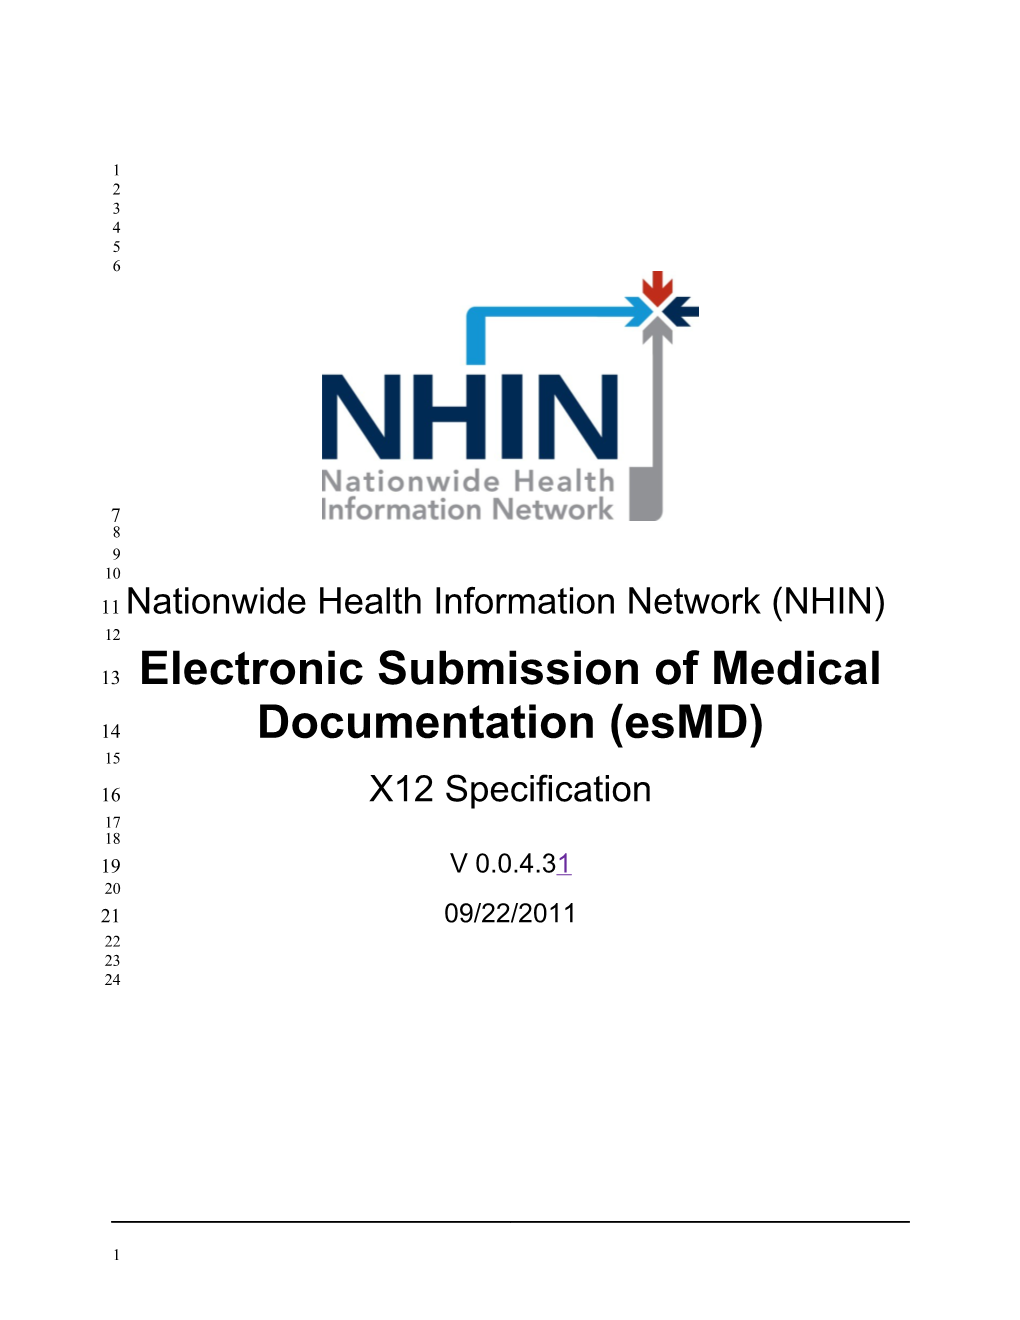 Electronic Submission of Medical Documentation (Esmd)